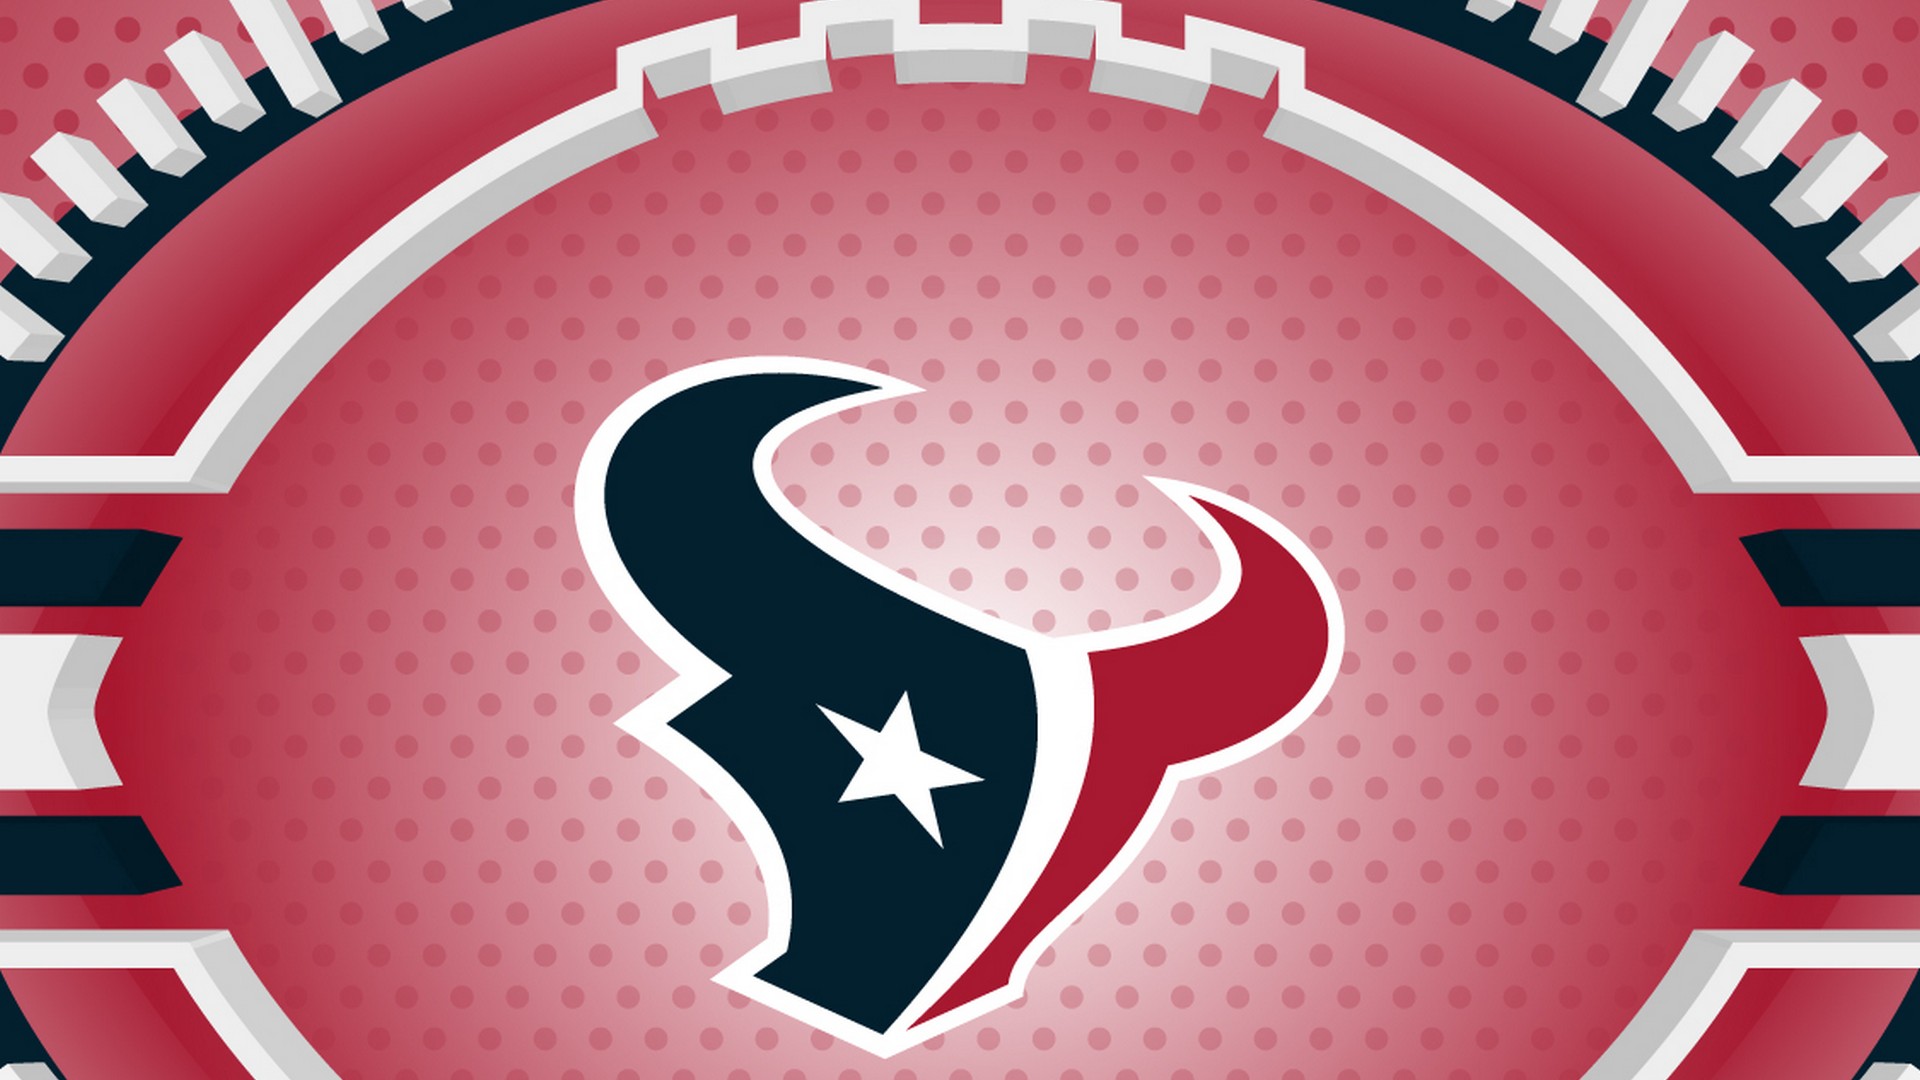 Wallpapers HD Houston Texans NFL | 2020